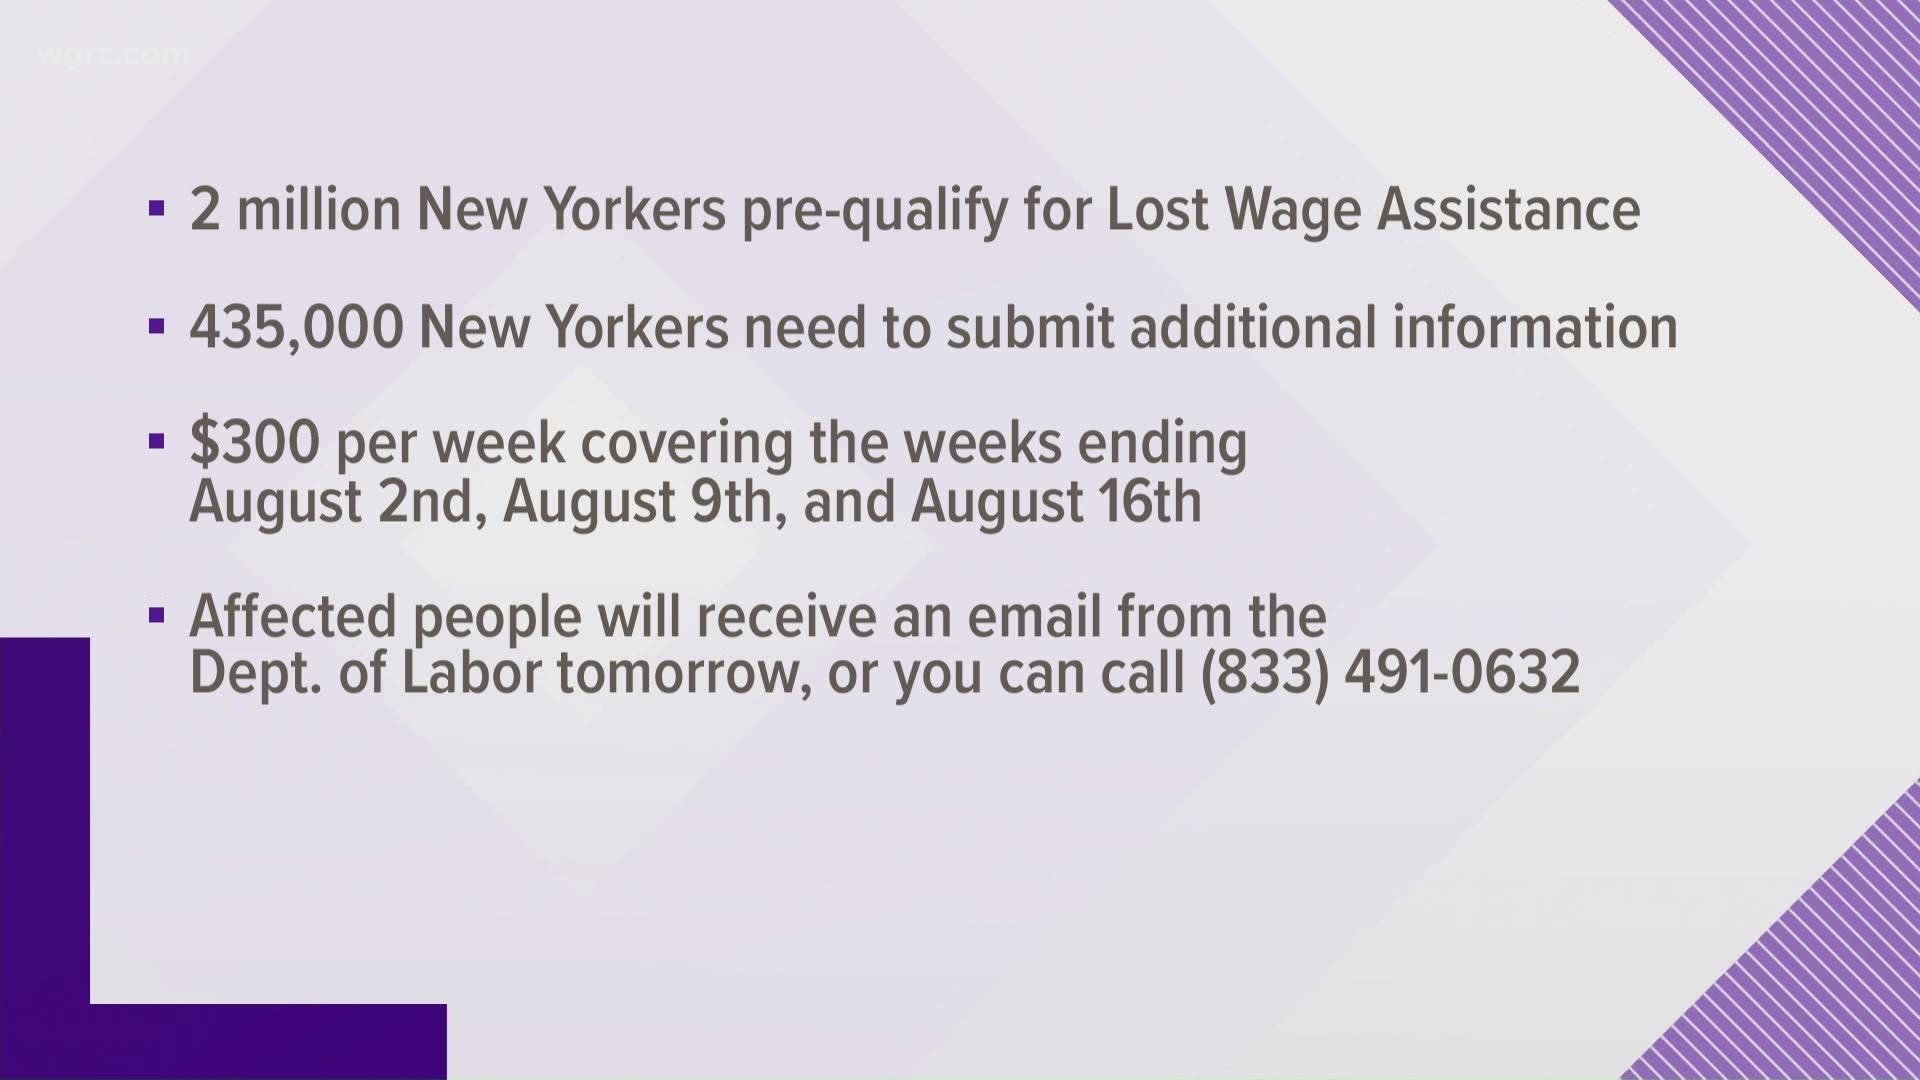 Lost wage payments begin next week